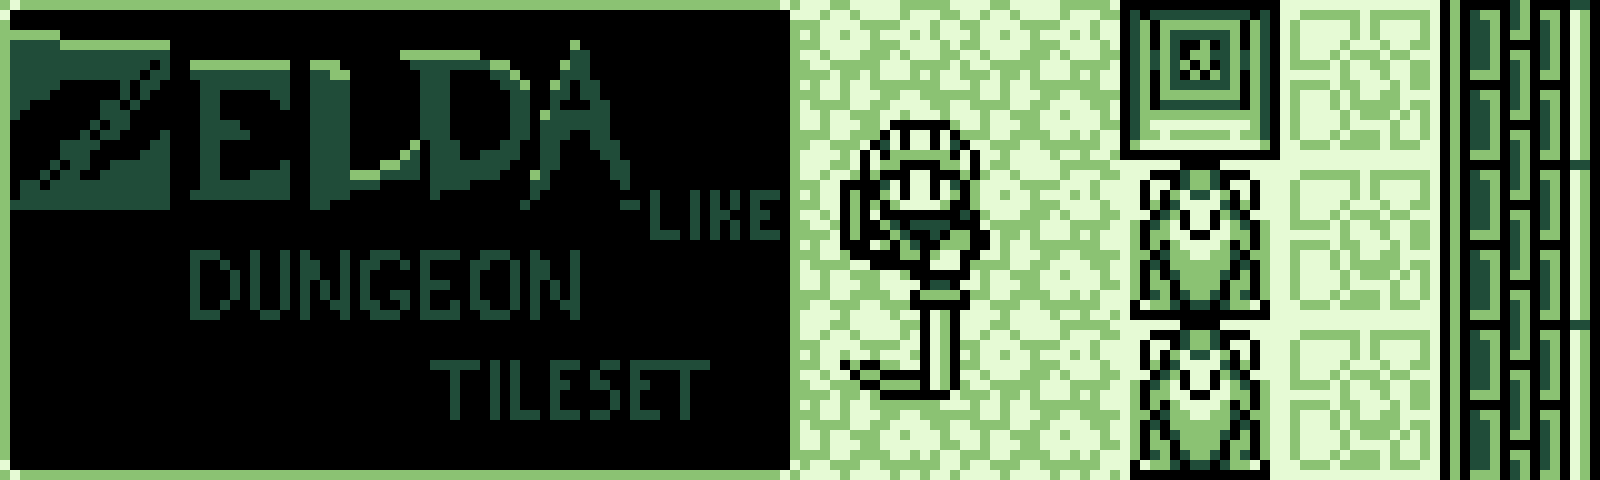 Gameboy Zelda-like Dungeon Assets